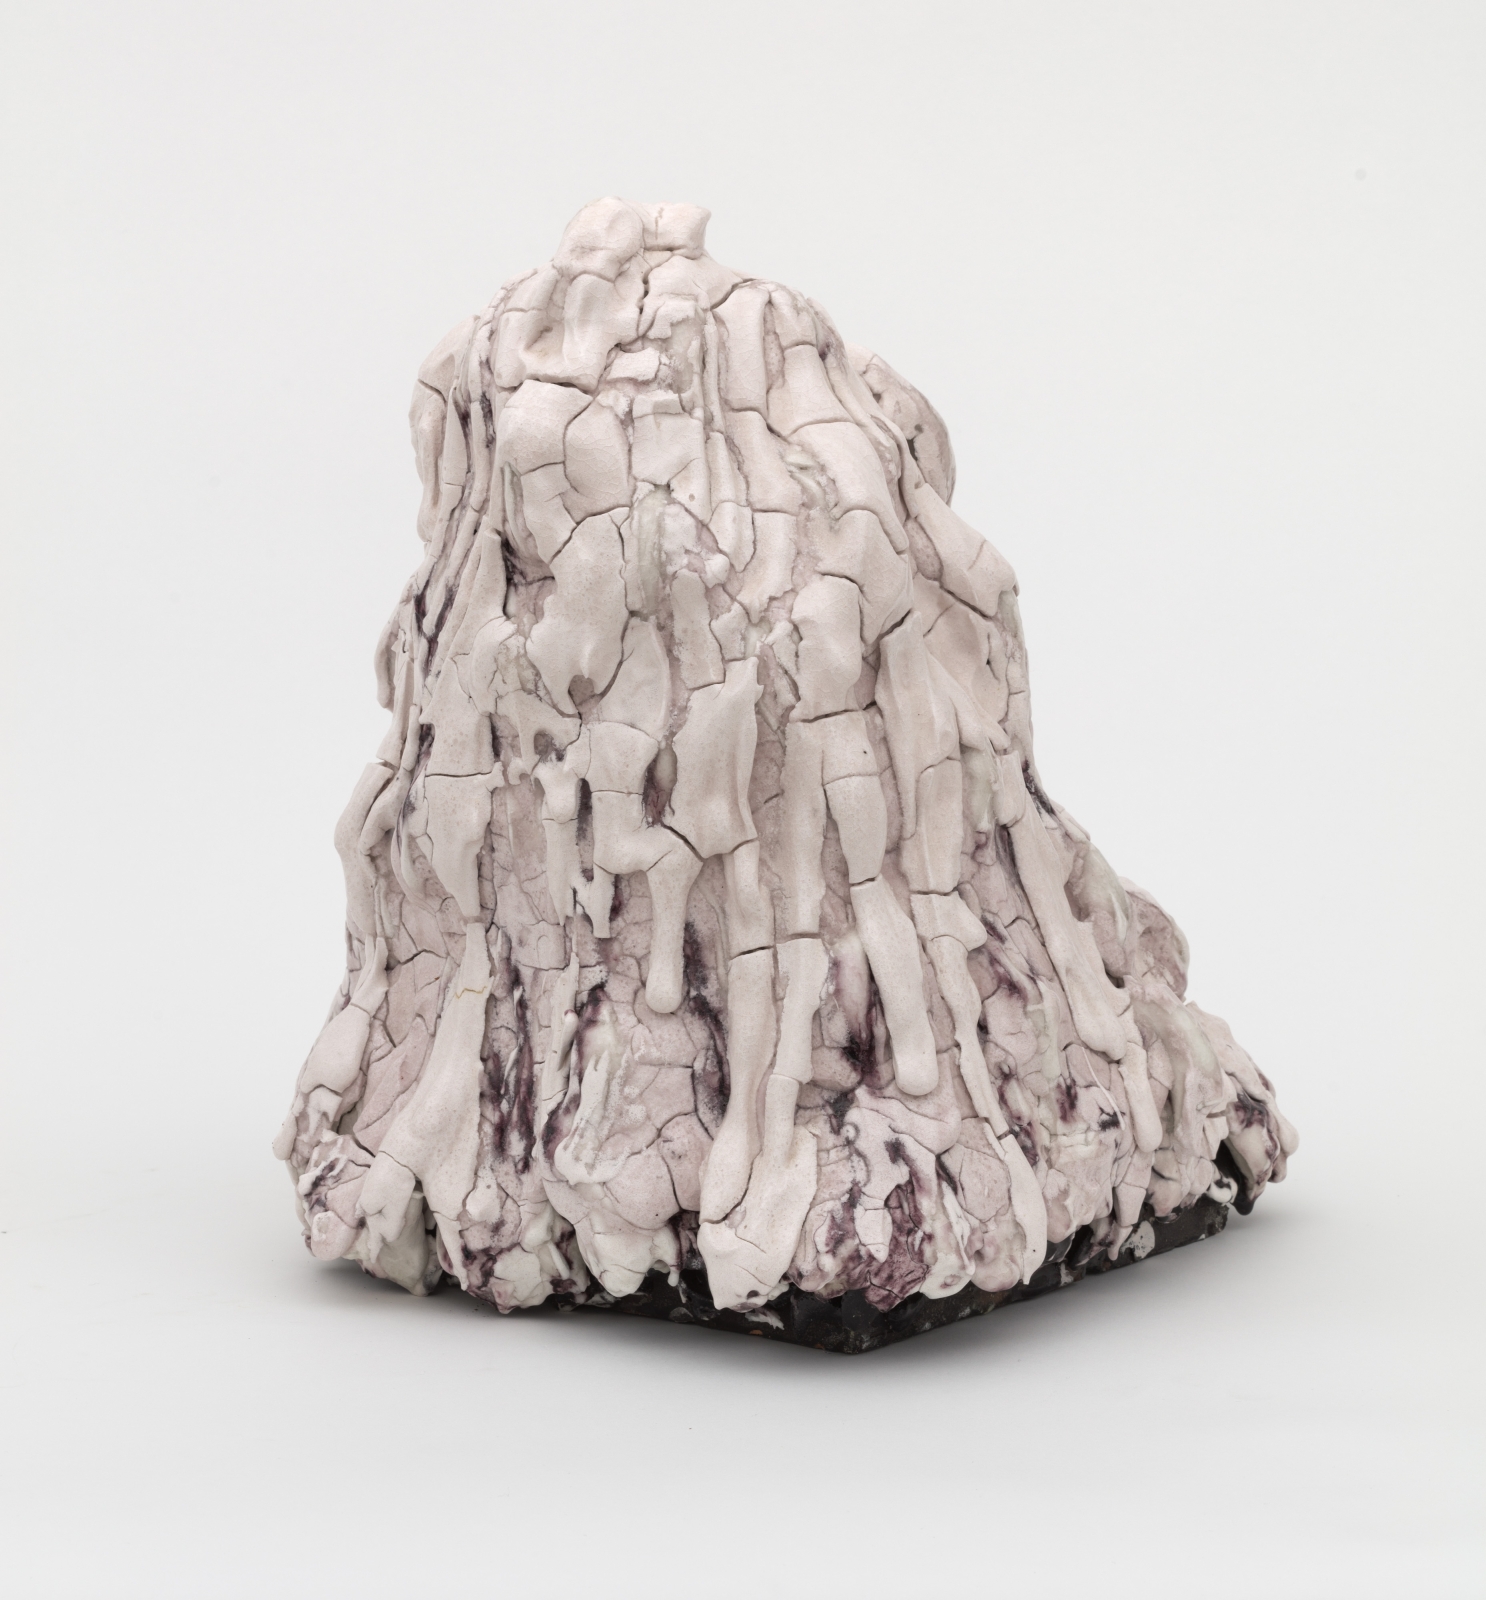 Annabeth Rosen
Flume, 2015
fired ceramic
15 x 13 x 12 ins.
38.1 x 33 x 30.5 cm